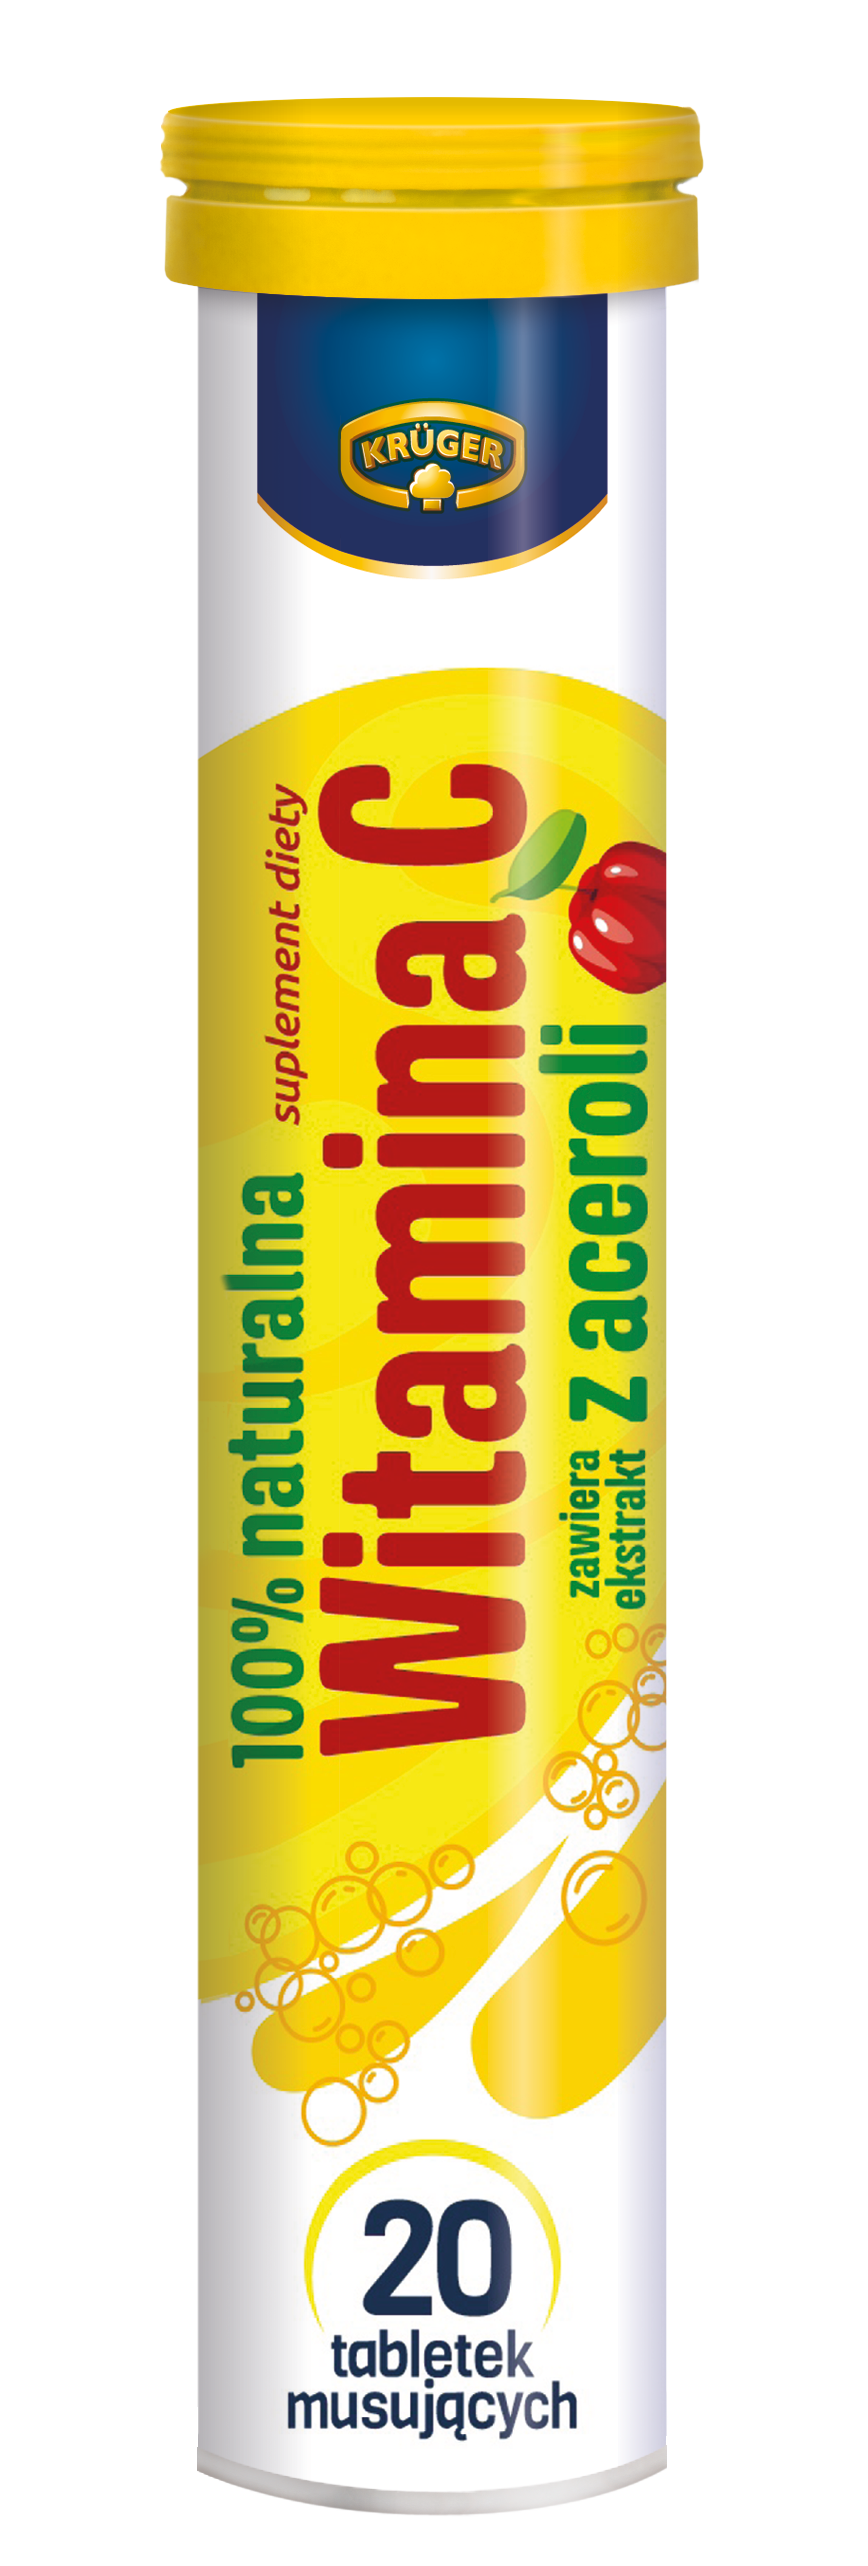 Krüger Tabletas efervescentes 100% naturales de vitamina C con sabor a cereza